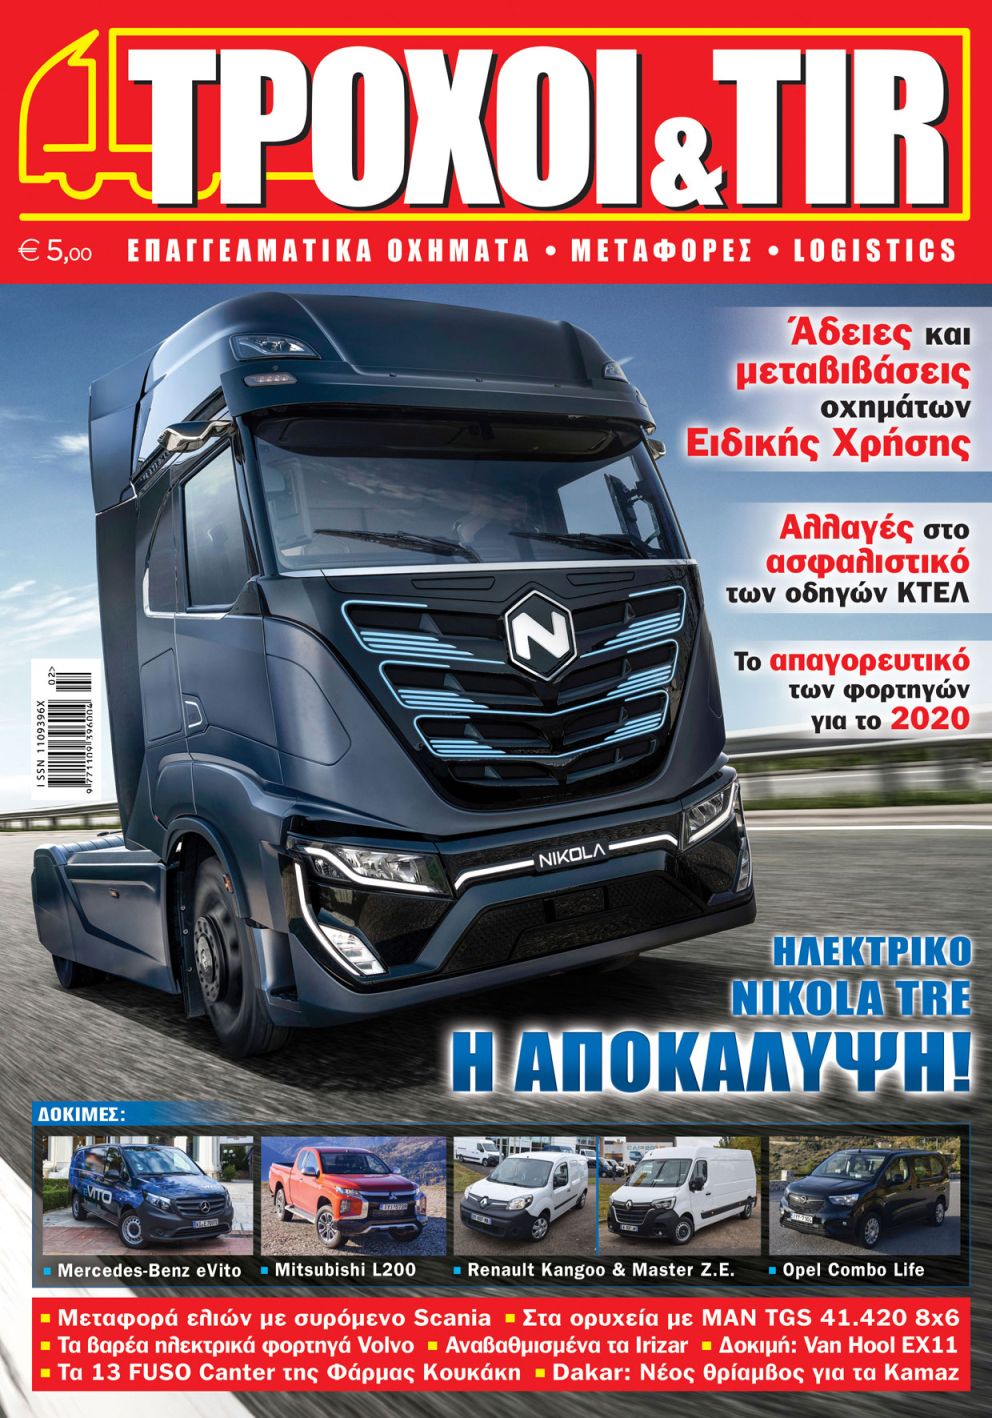 Troxoikaitir issue 382 february 2020 cover